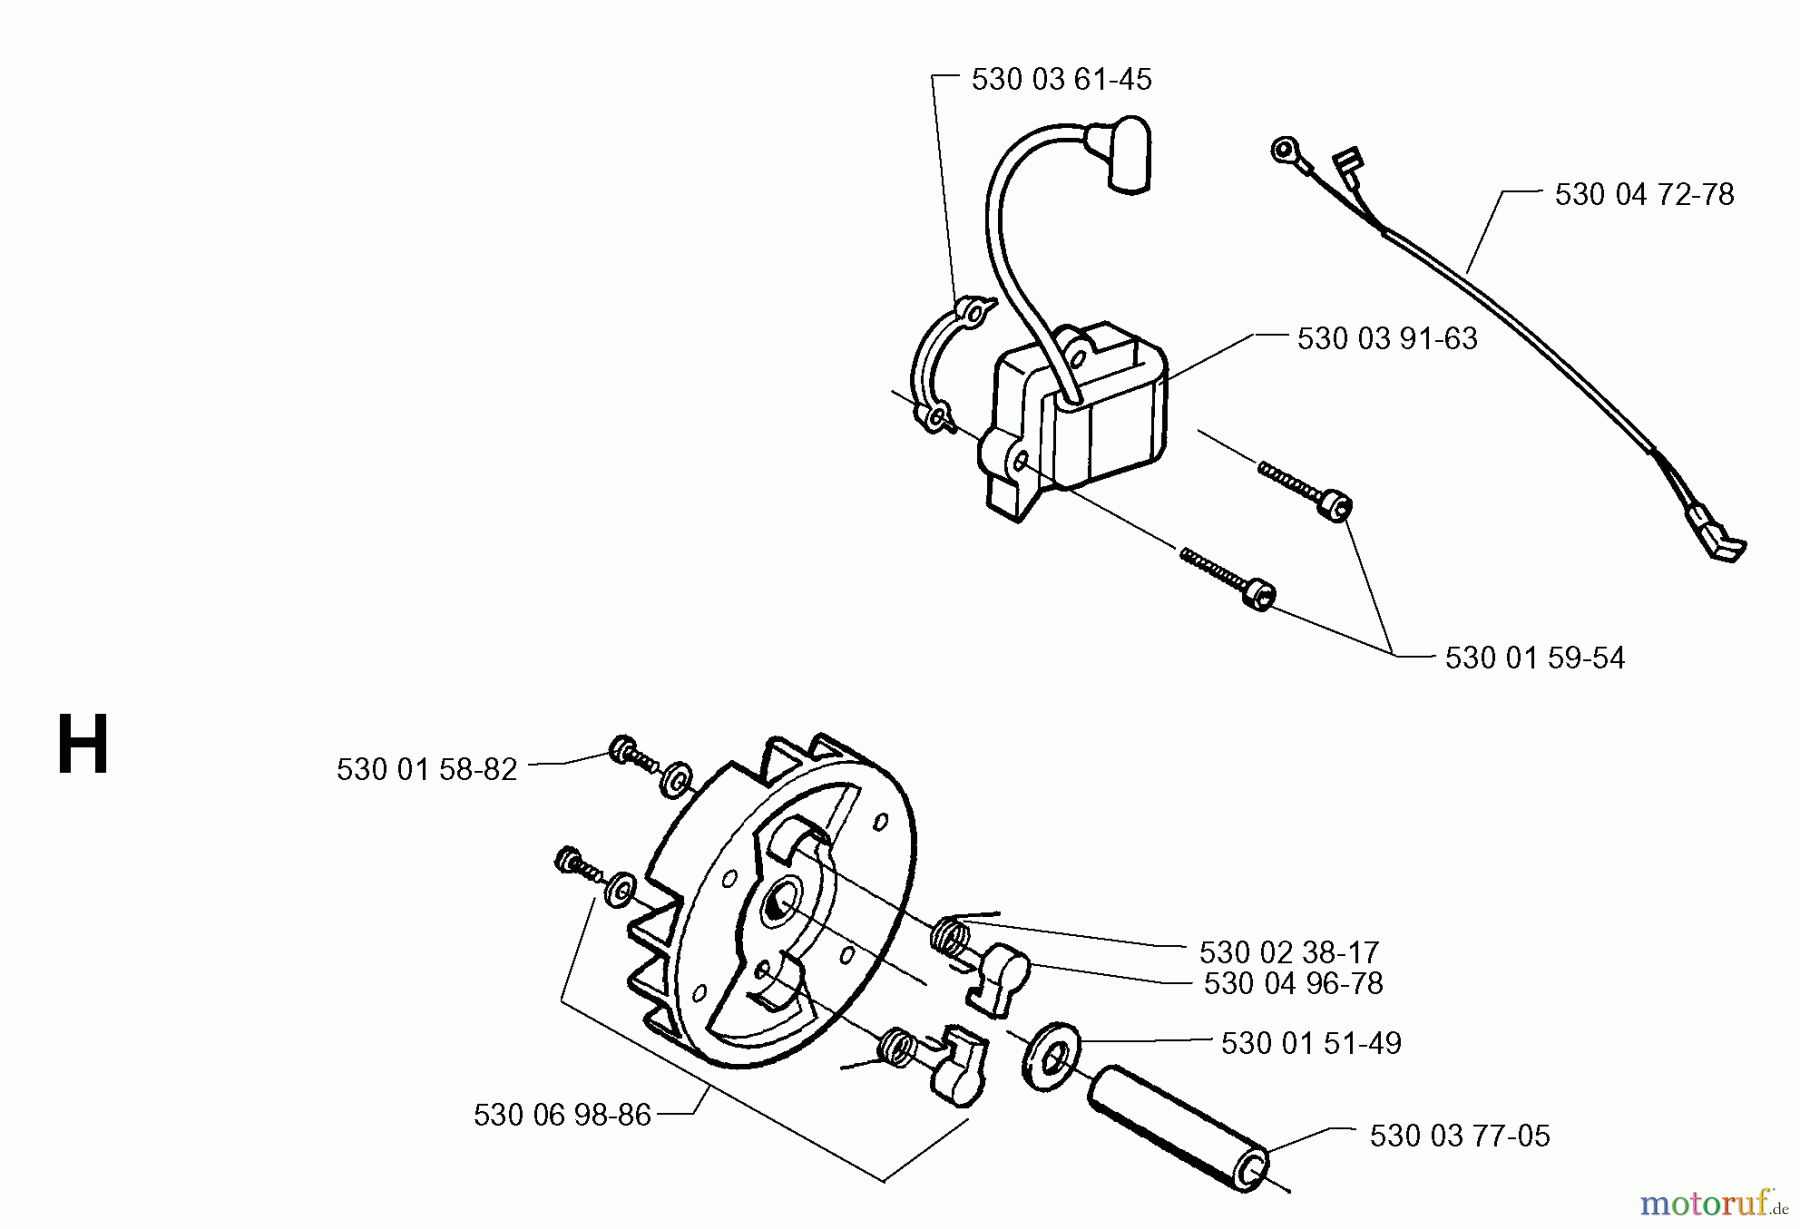  Jonsered Motorsensen, Trimmer GT26D - Jonsered String/Brush Trimmer (1999-05) IGNITION SYSTEM